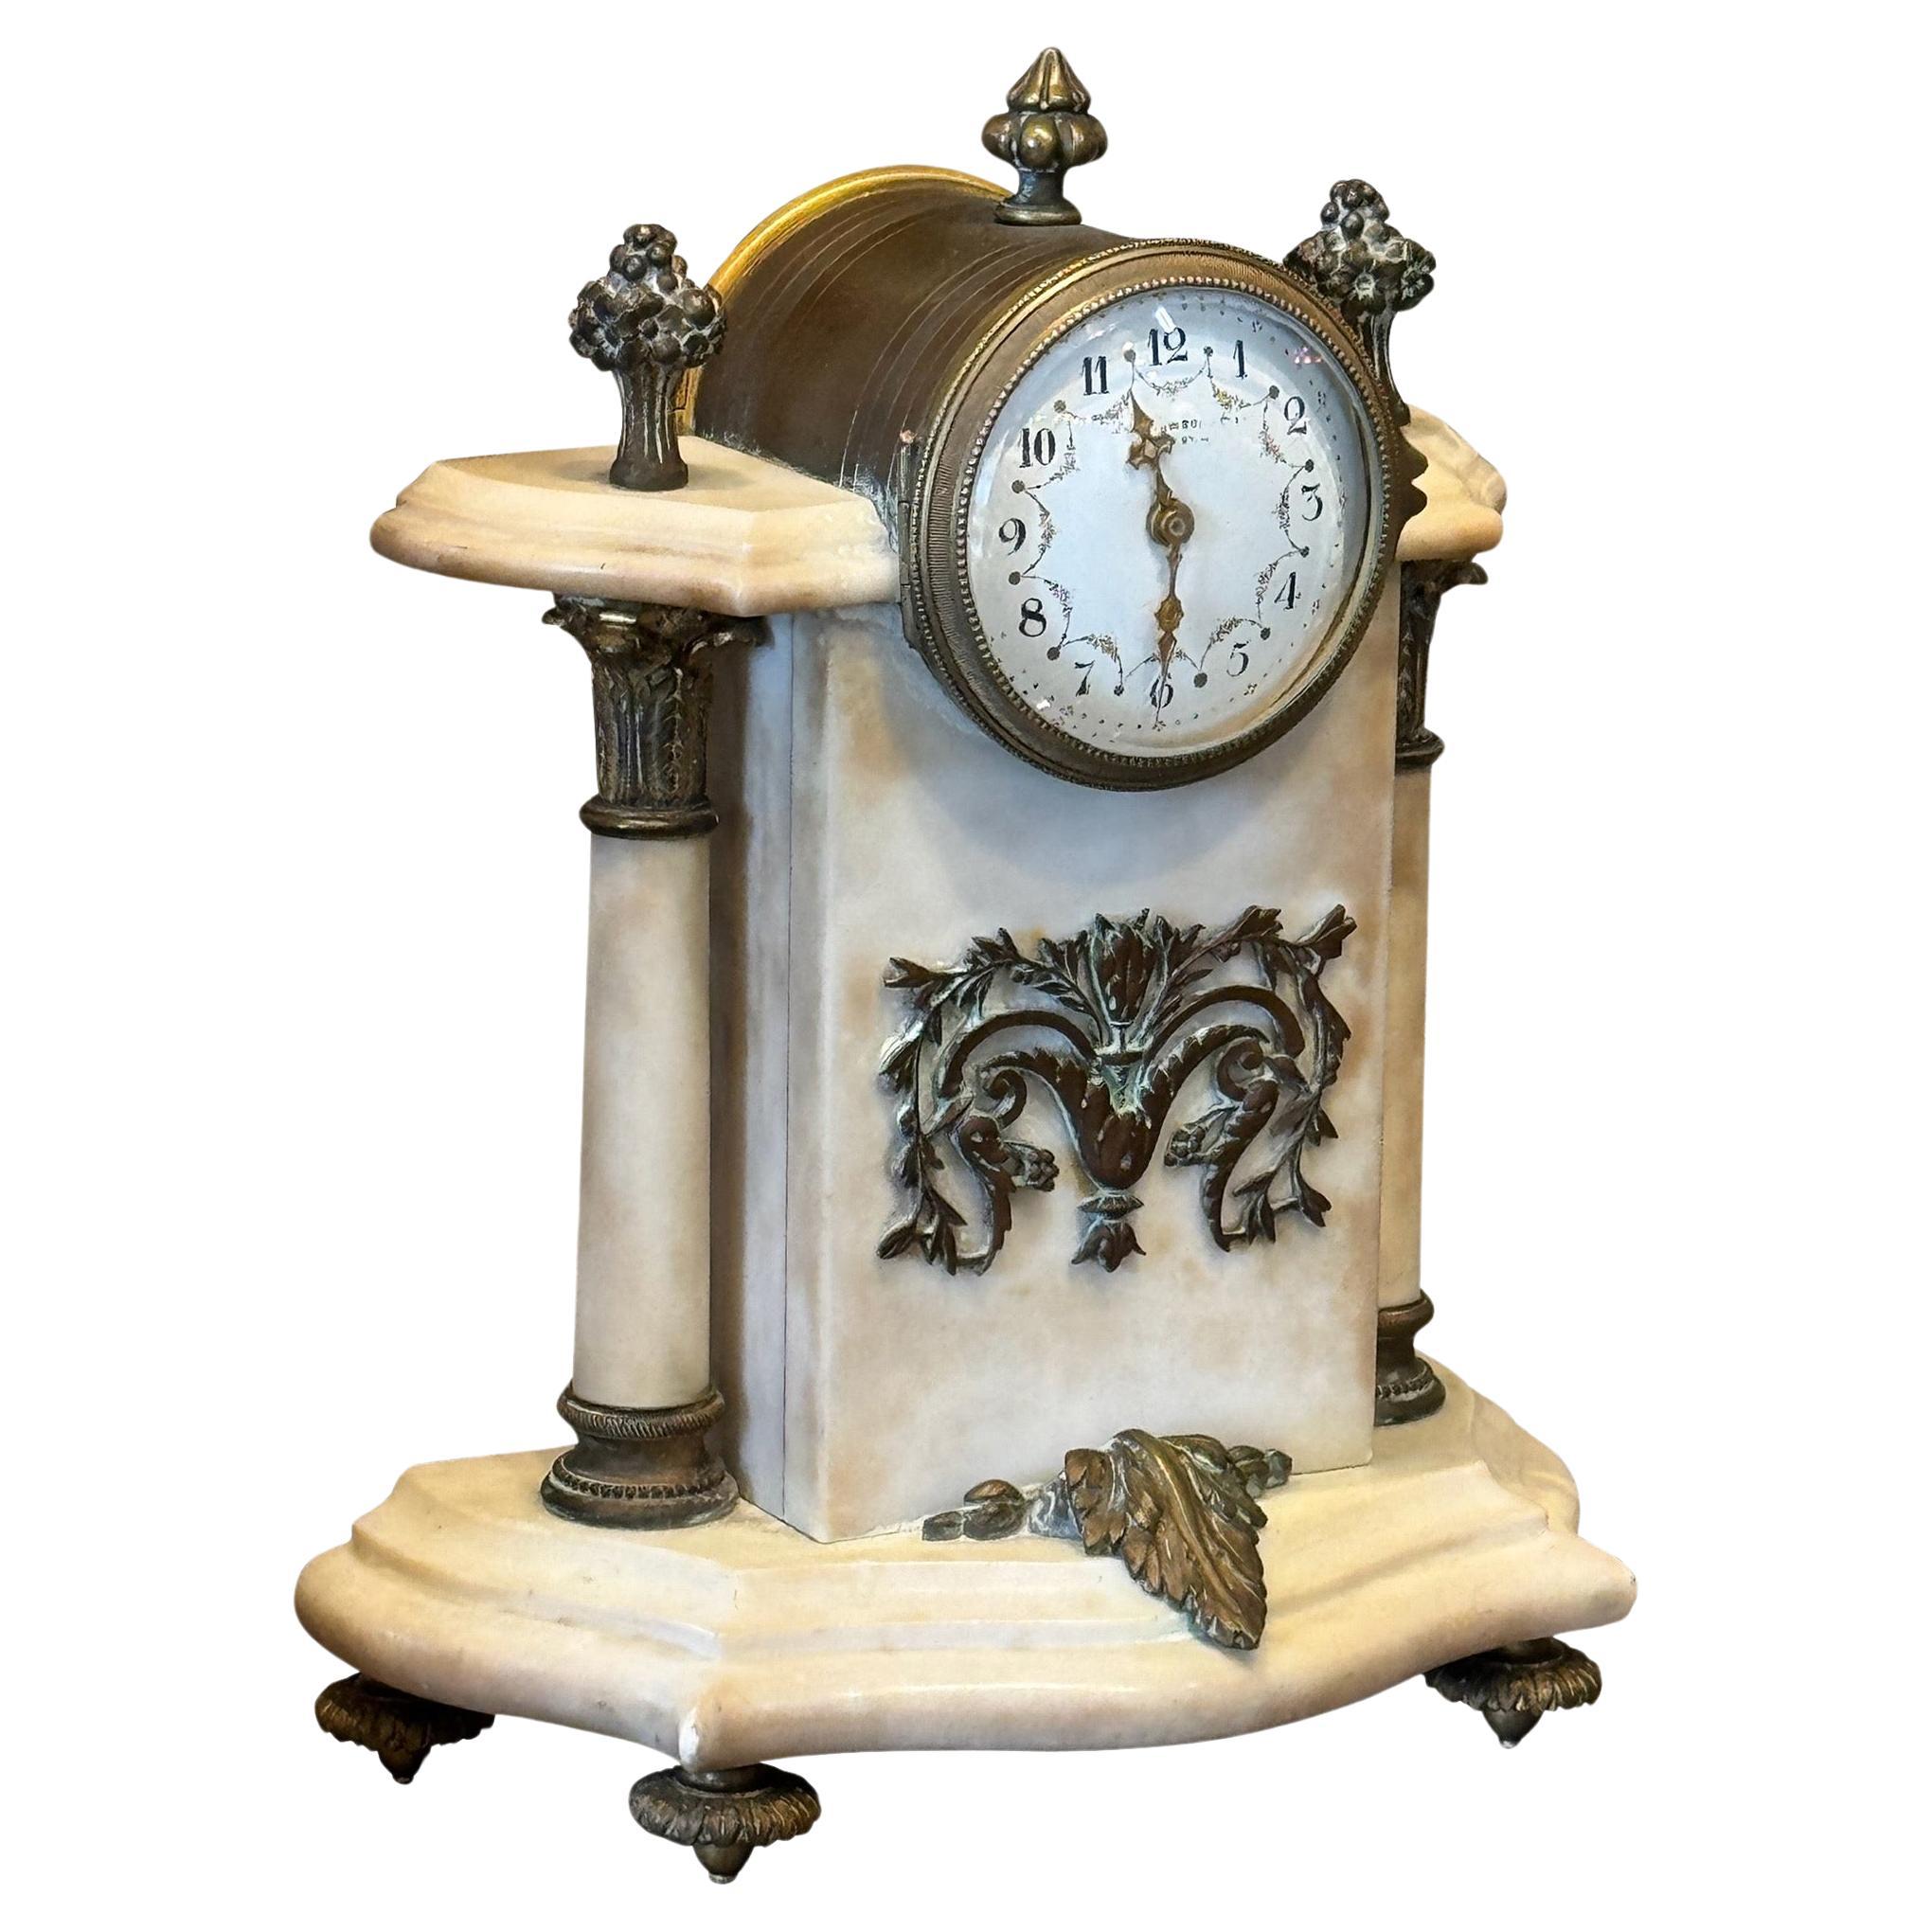 Petite horloge en marbre du 19e siècle